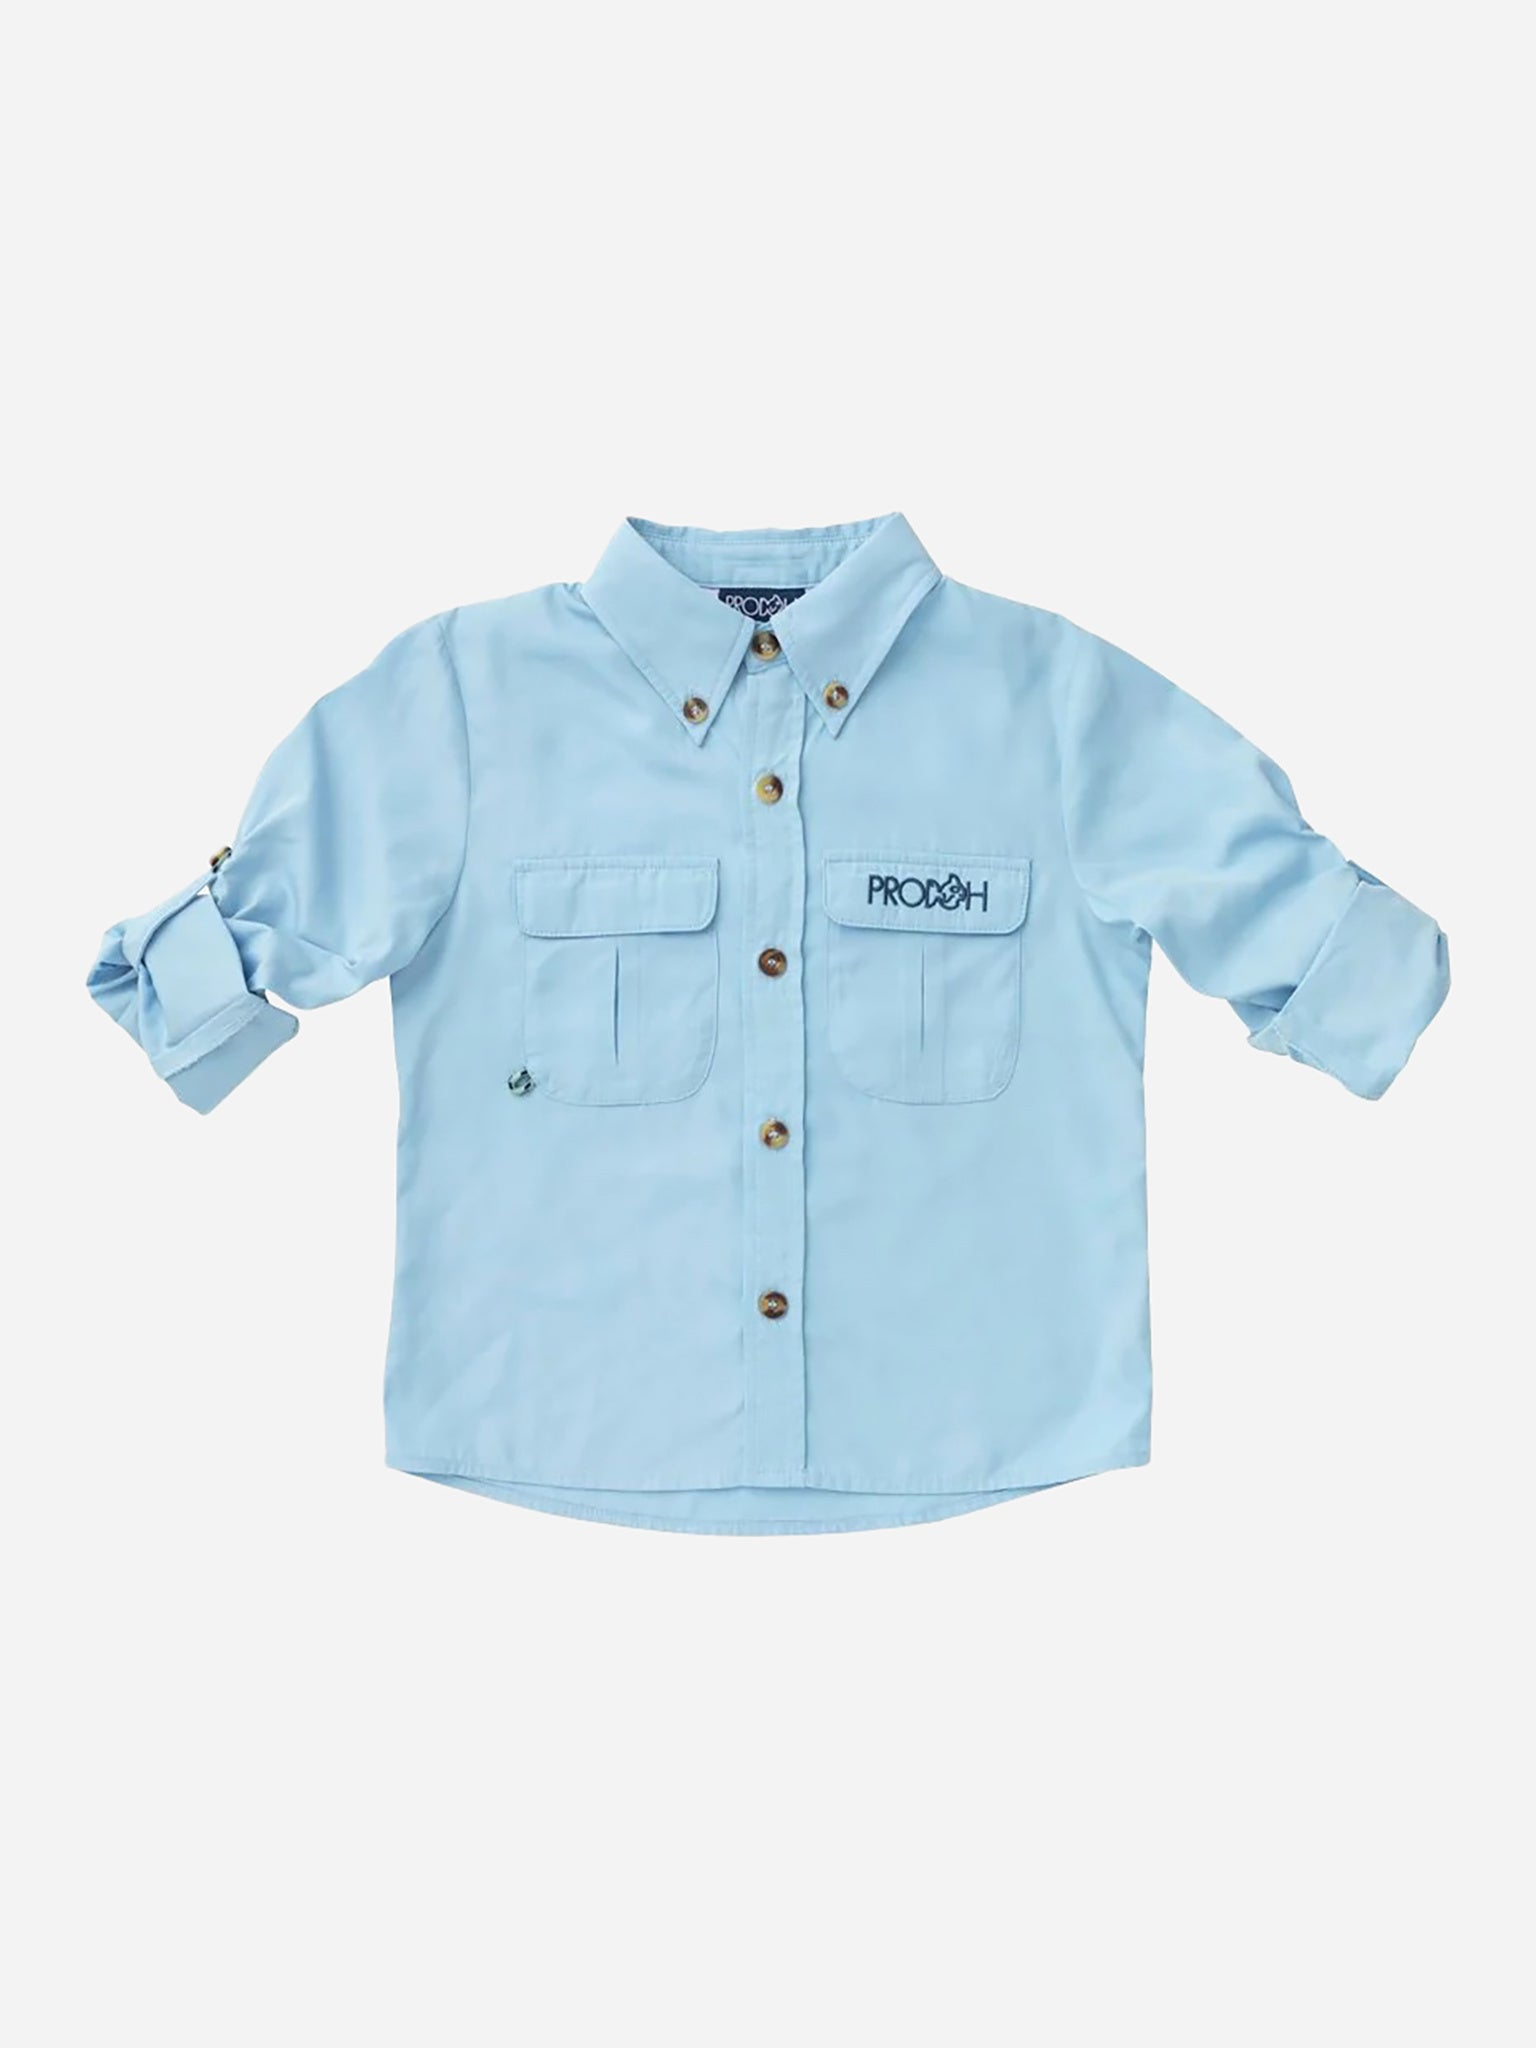 Prodoh Boys Founders Fishing Shirt, Clear Sky, Polyester/Cotton | Size: 18M | St. Bernard